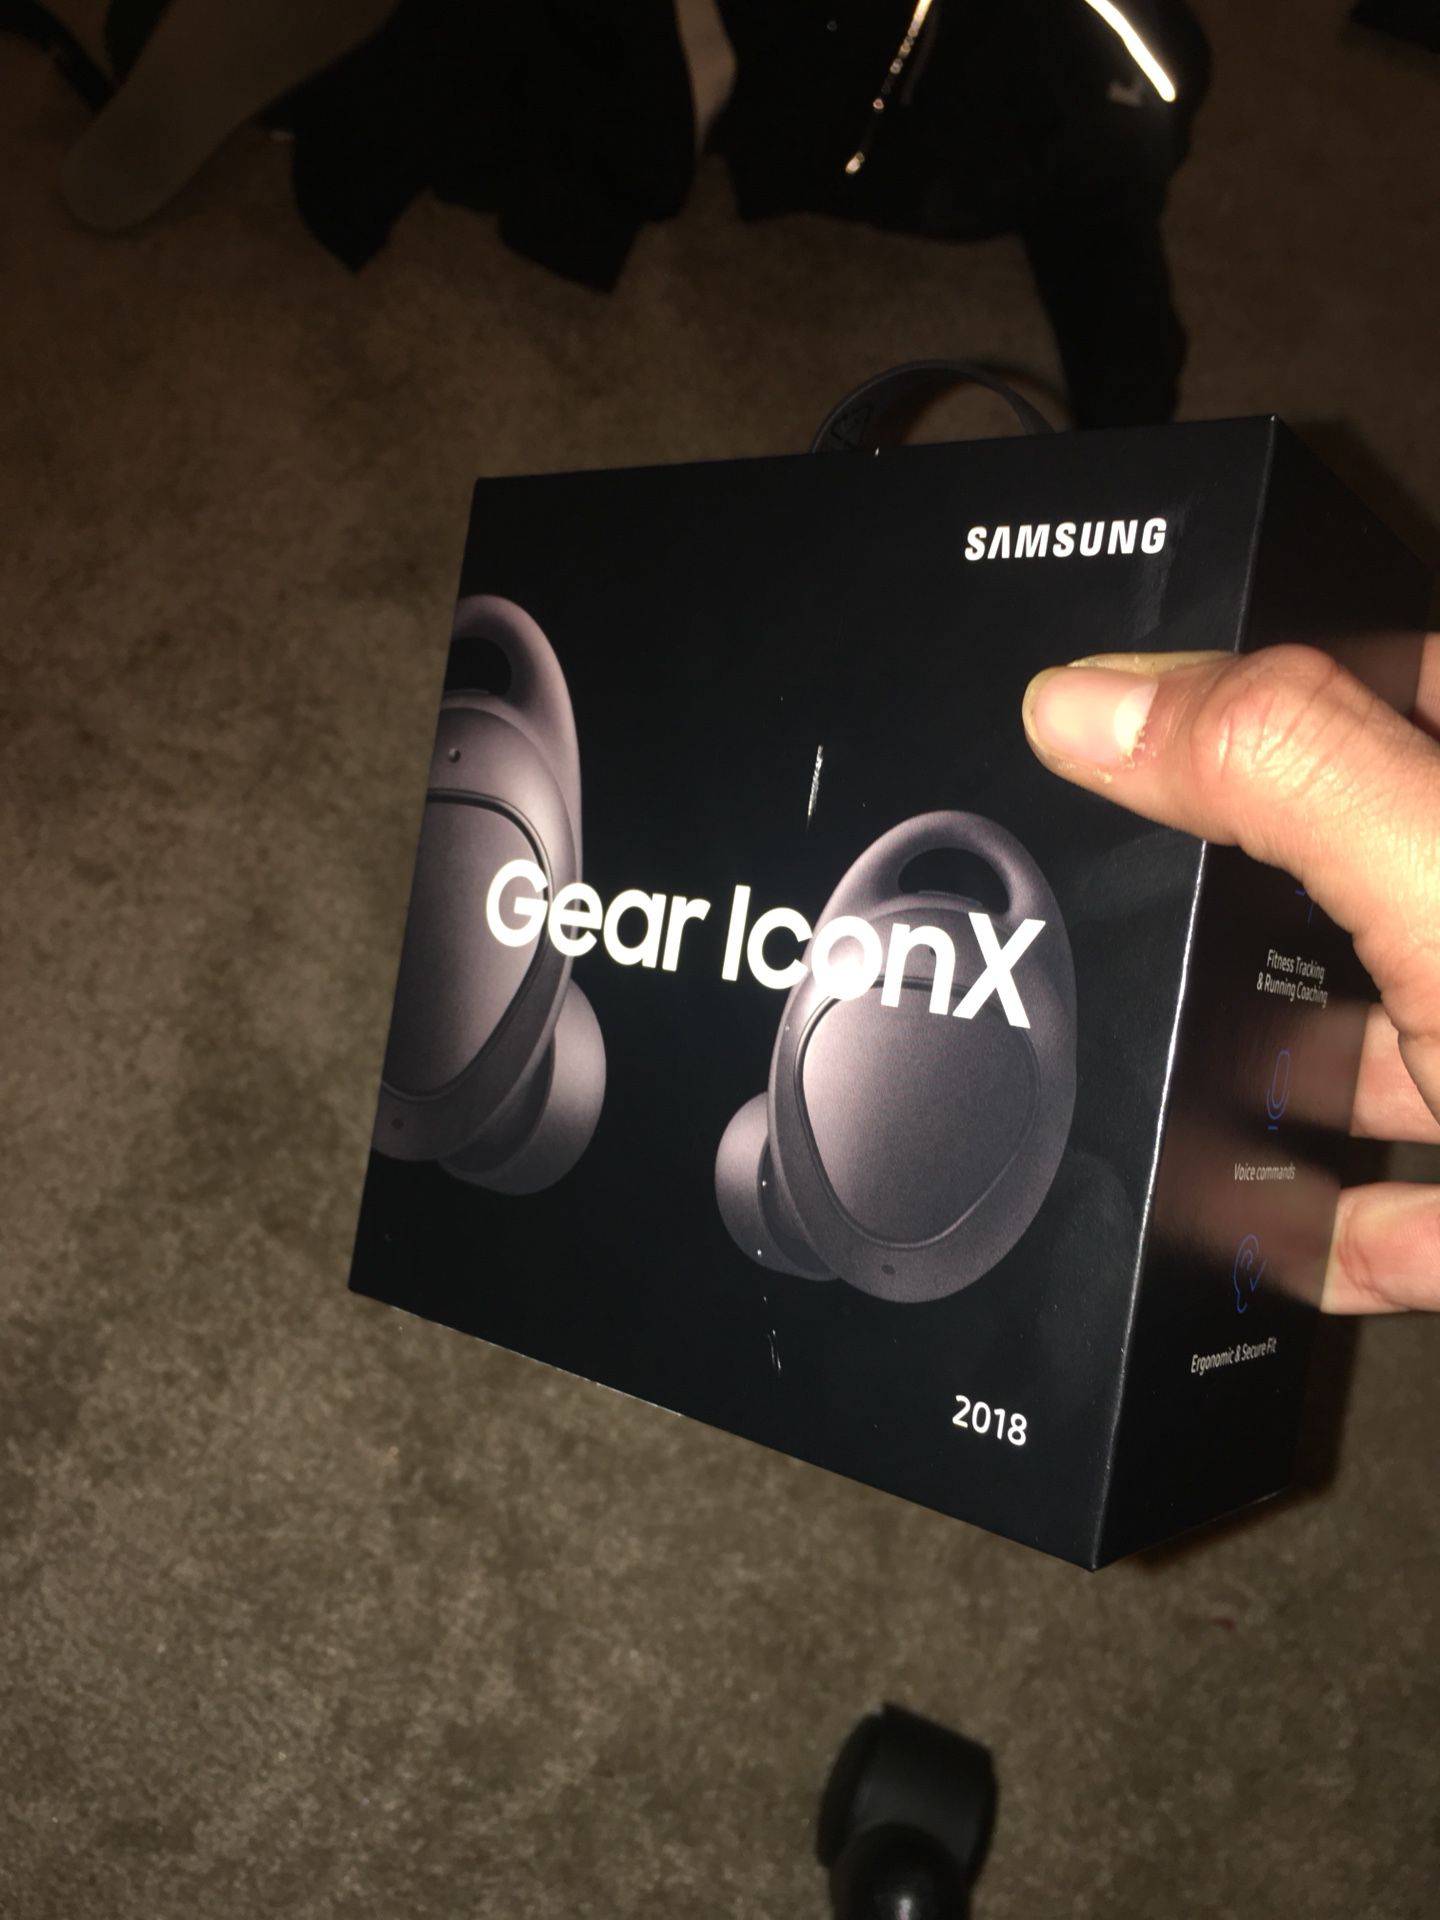 Samsung Gear iconX (2018 edition)